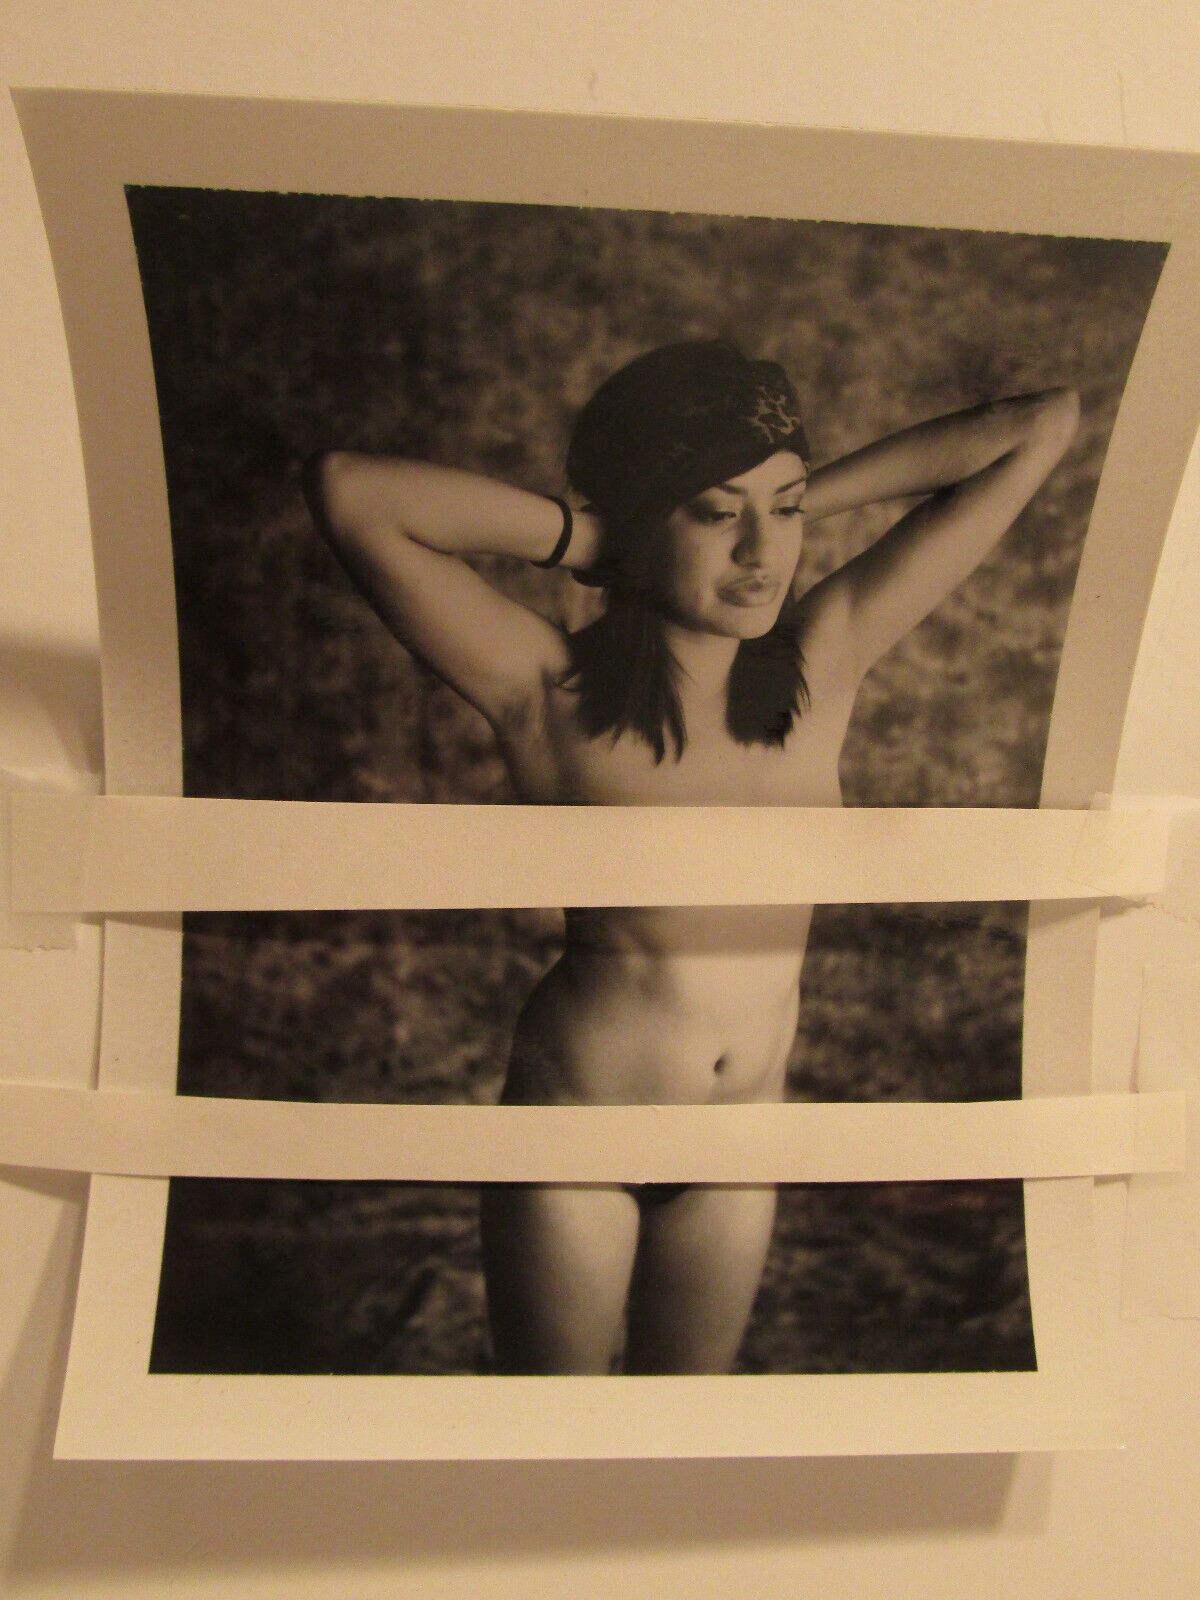 VINTAGE FOUND PHOTOGRAPH ORIGINAL ART PHOTO POLAROID SEXY PETITE MEXICAN WOMAN